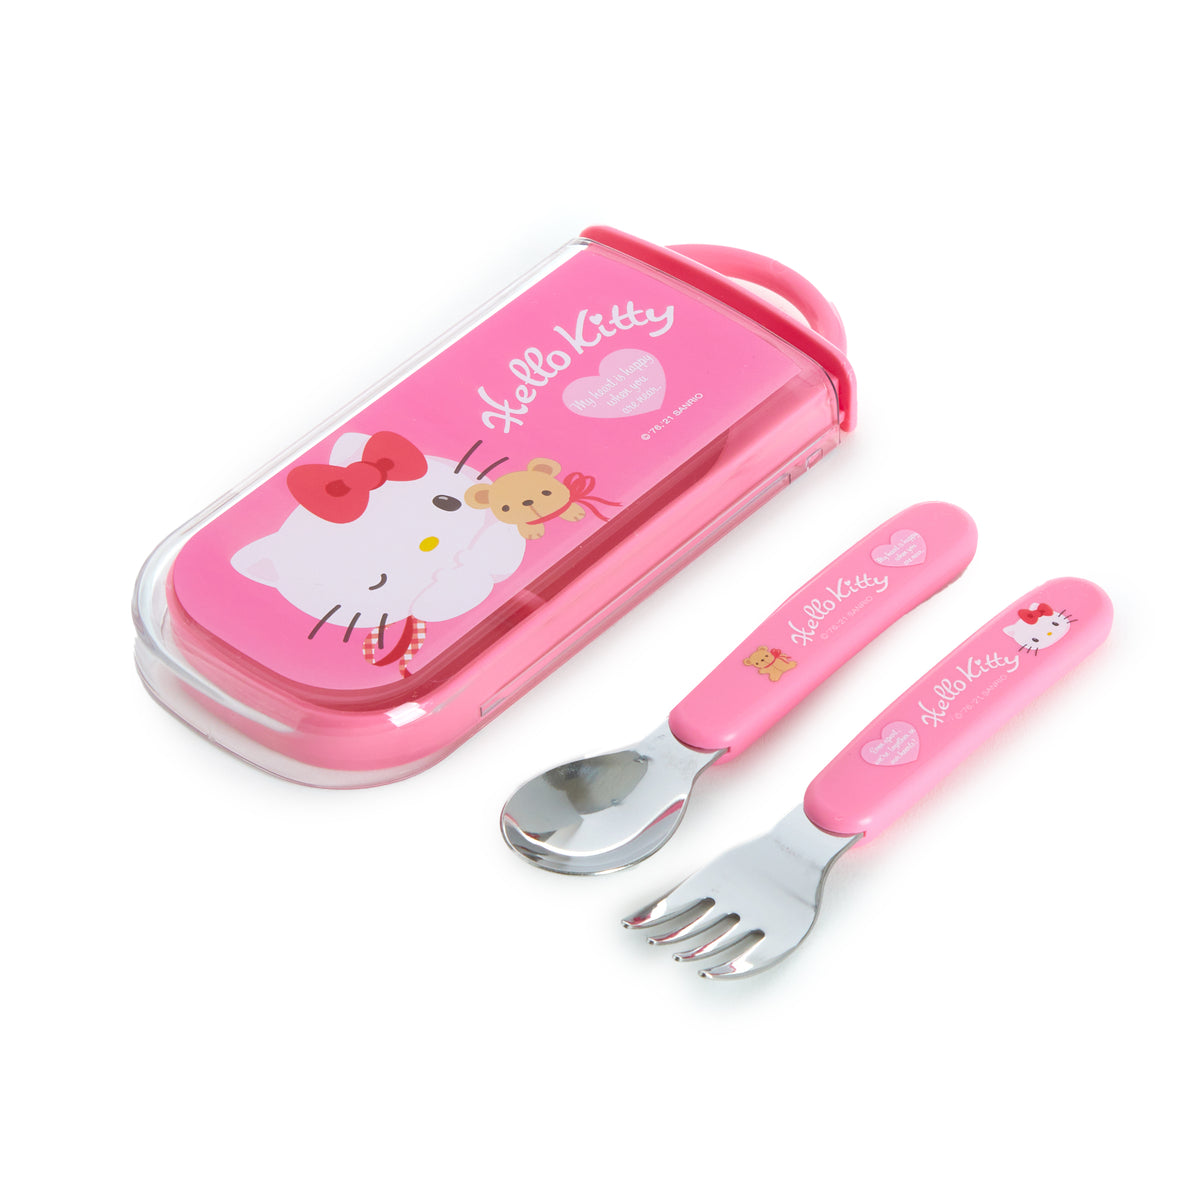 Sanrio Hello Kitty Stacked Snacks Ceramic Spoon Rest